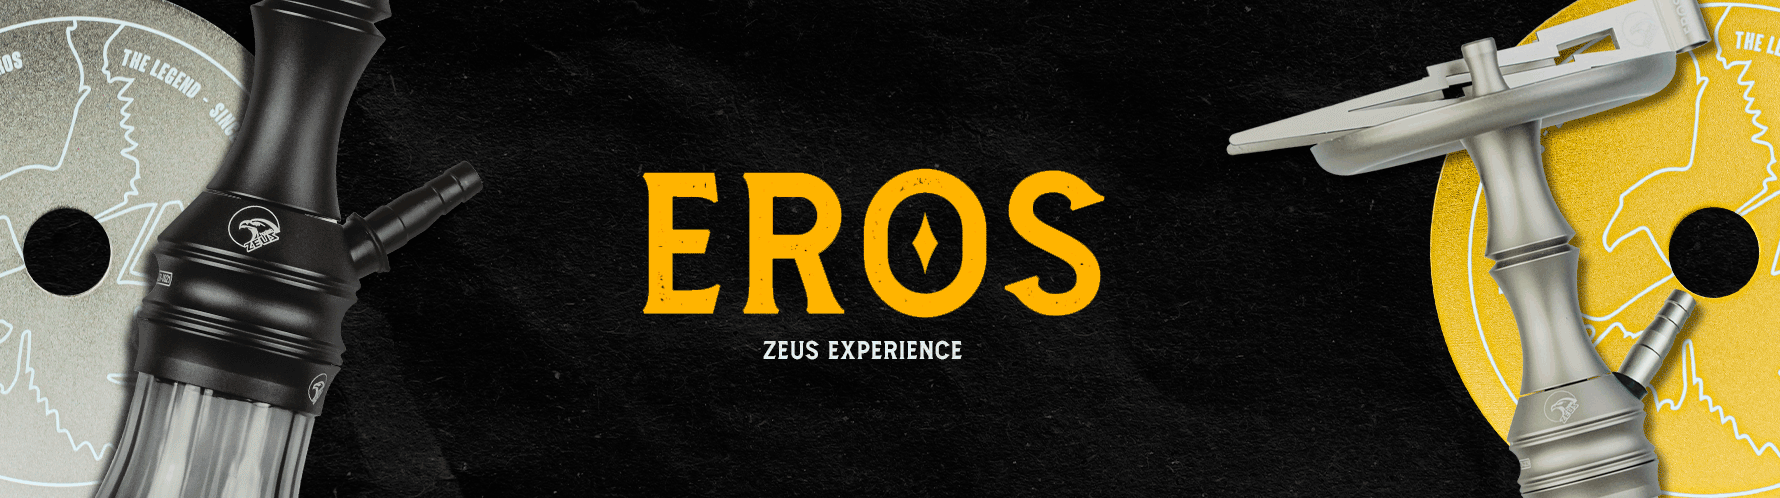 Eros Zeus